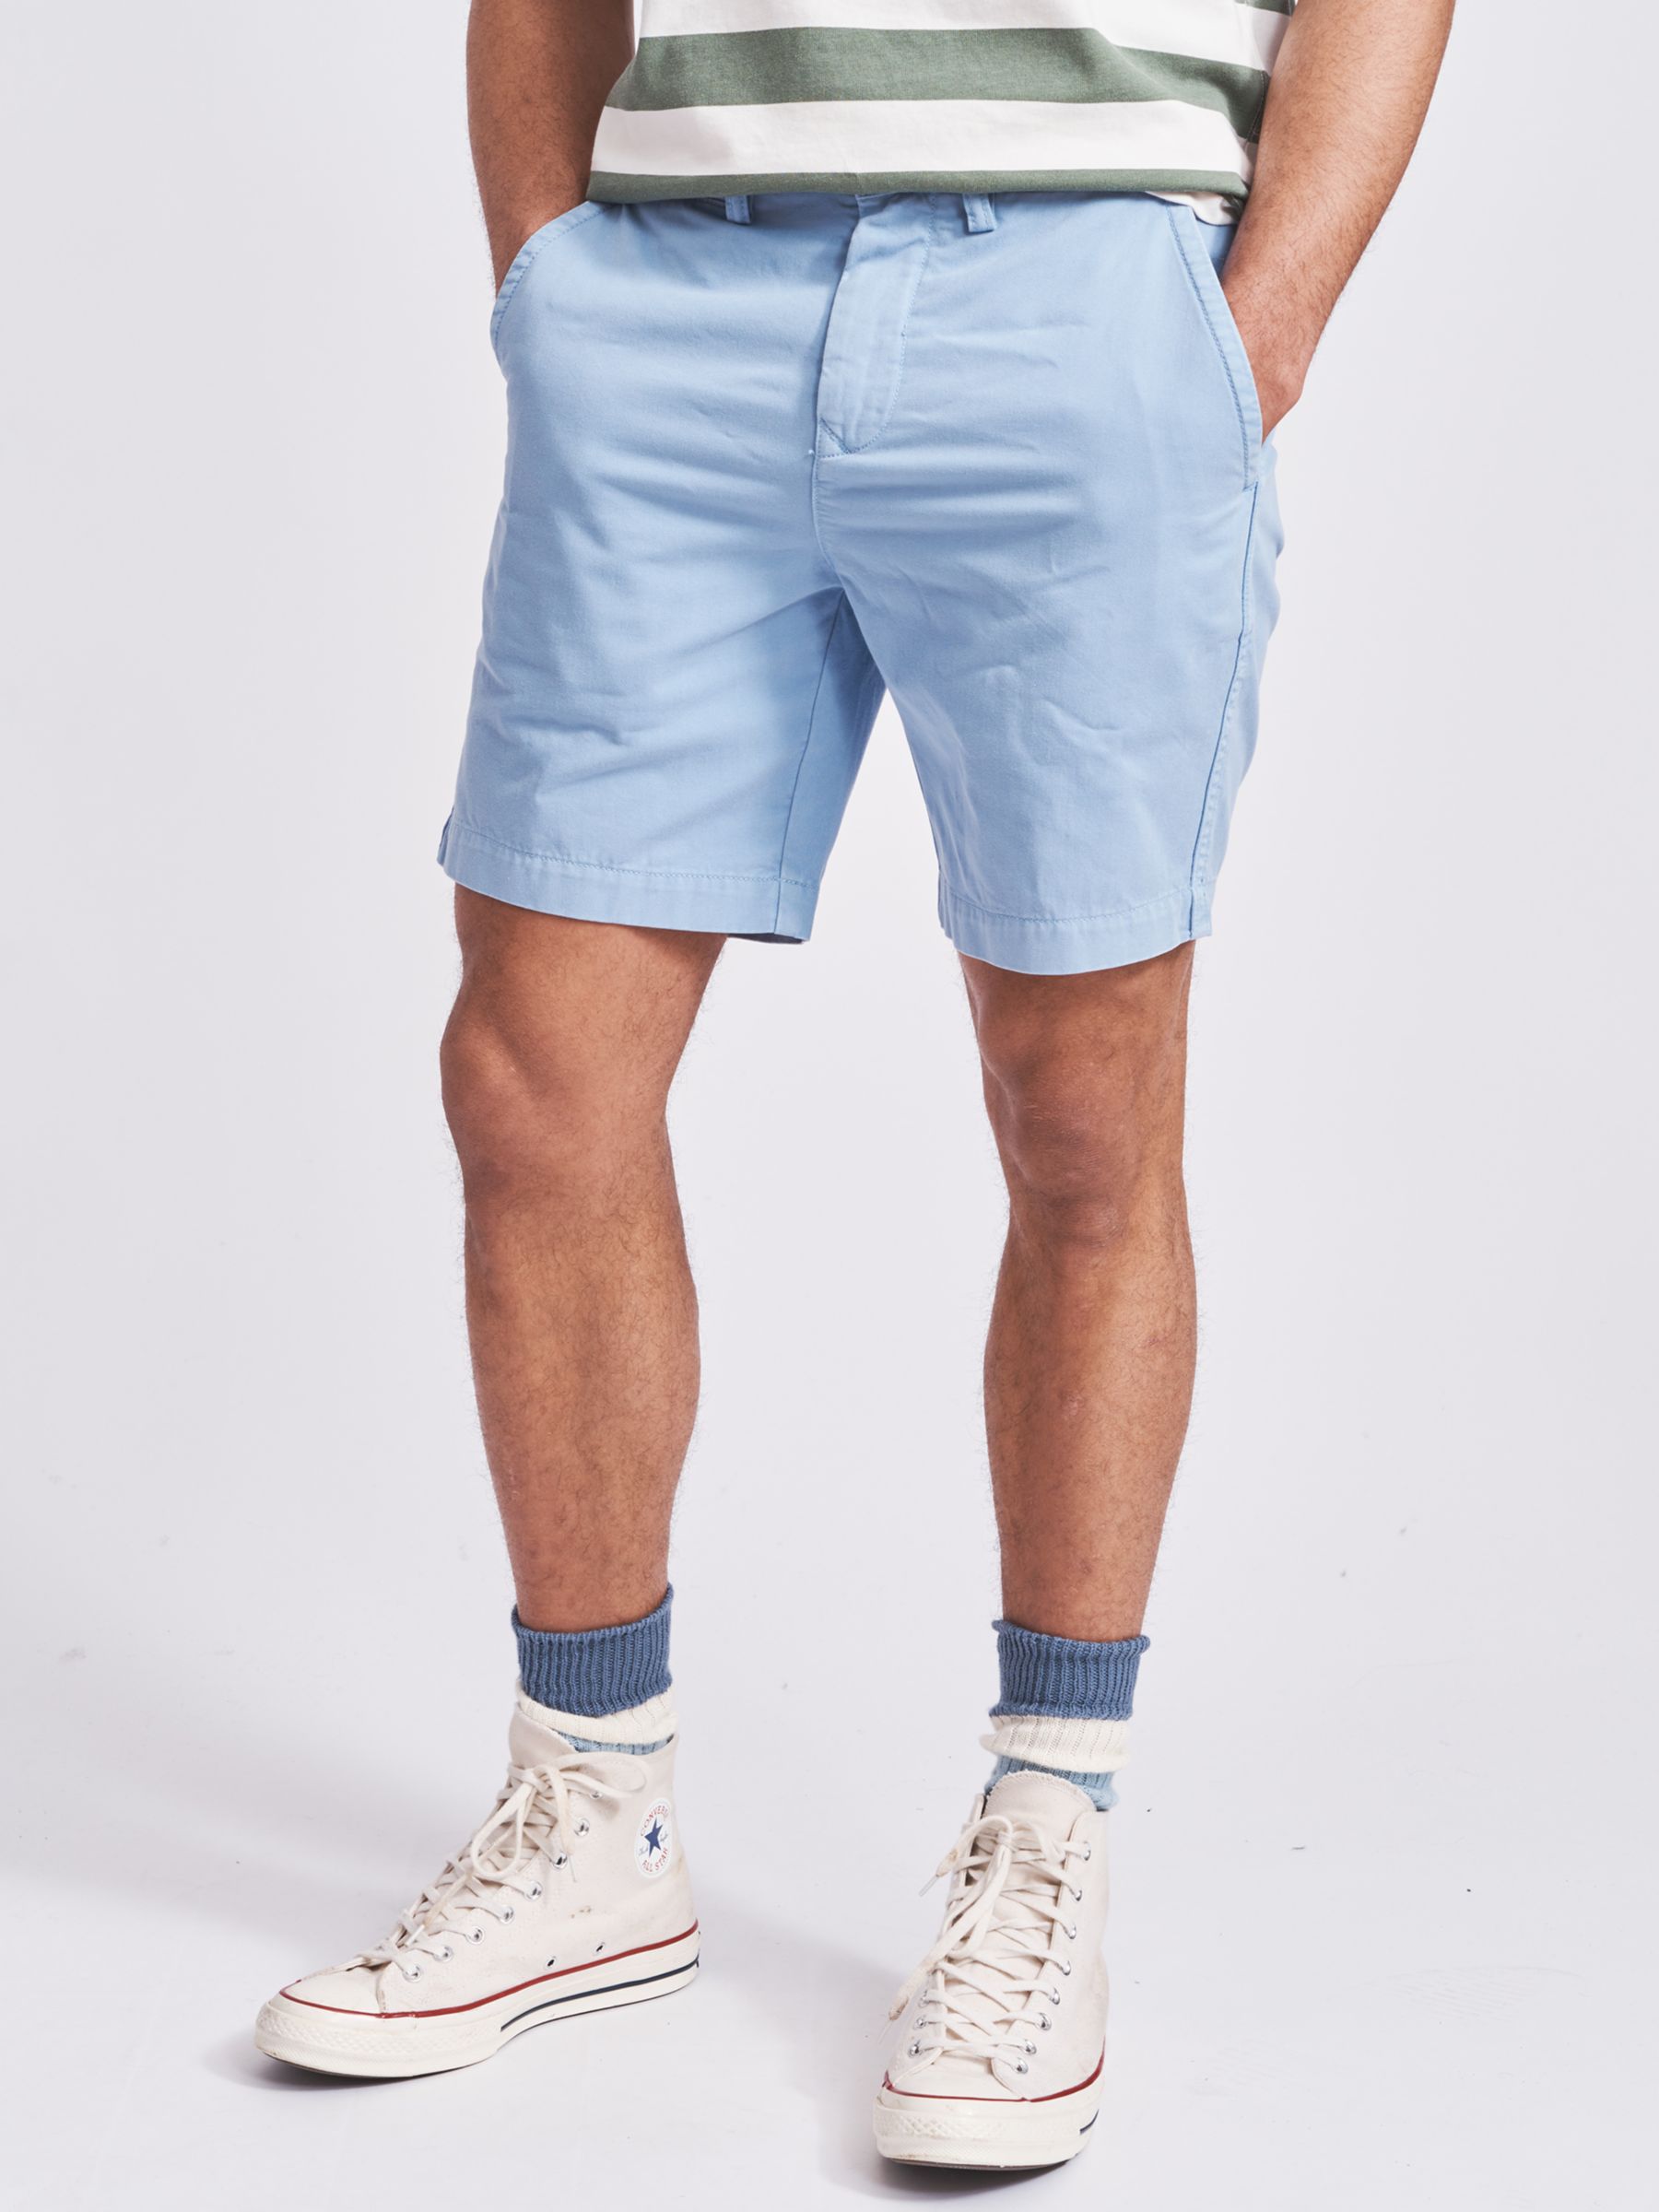 Aubin Stamford Chino Shorts, Blue, 30R